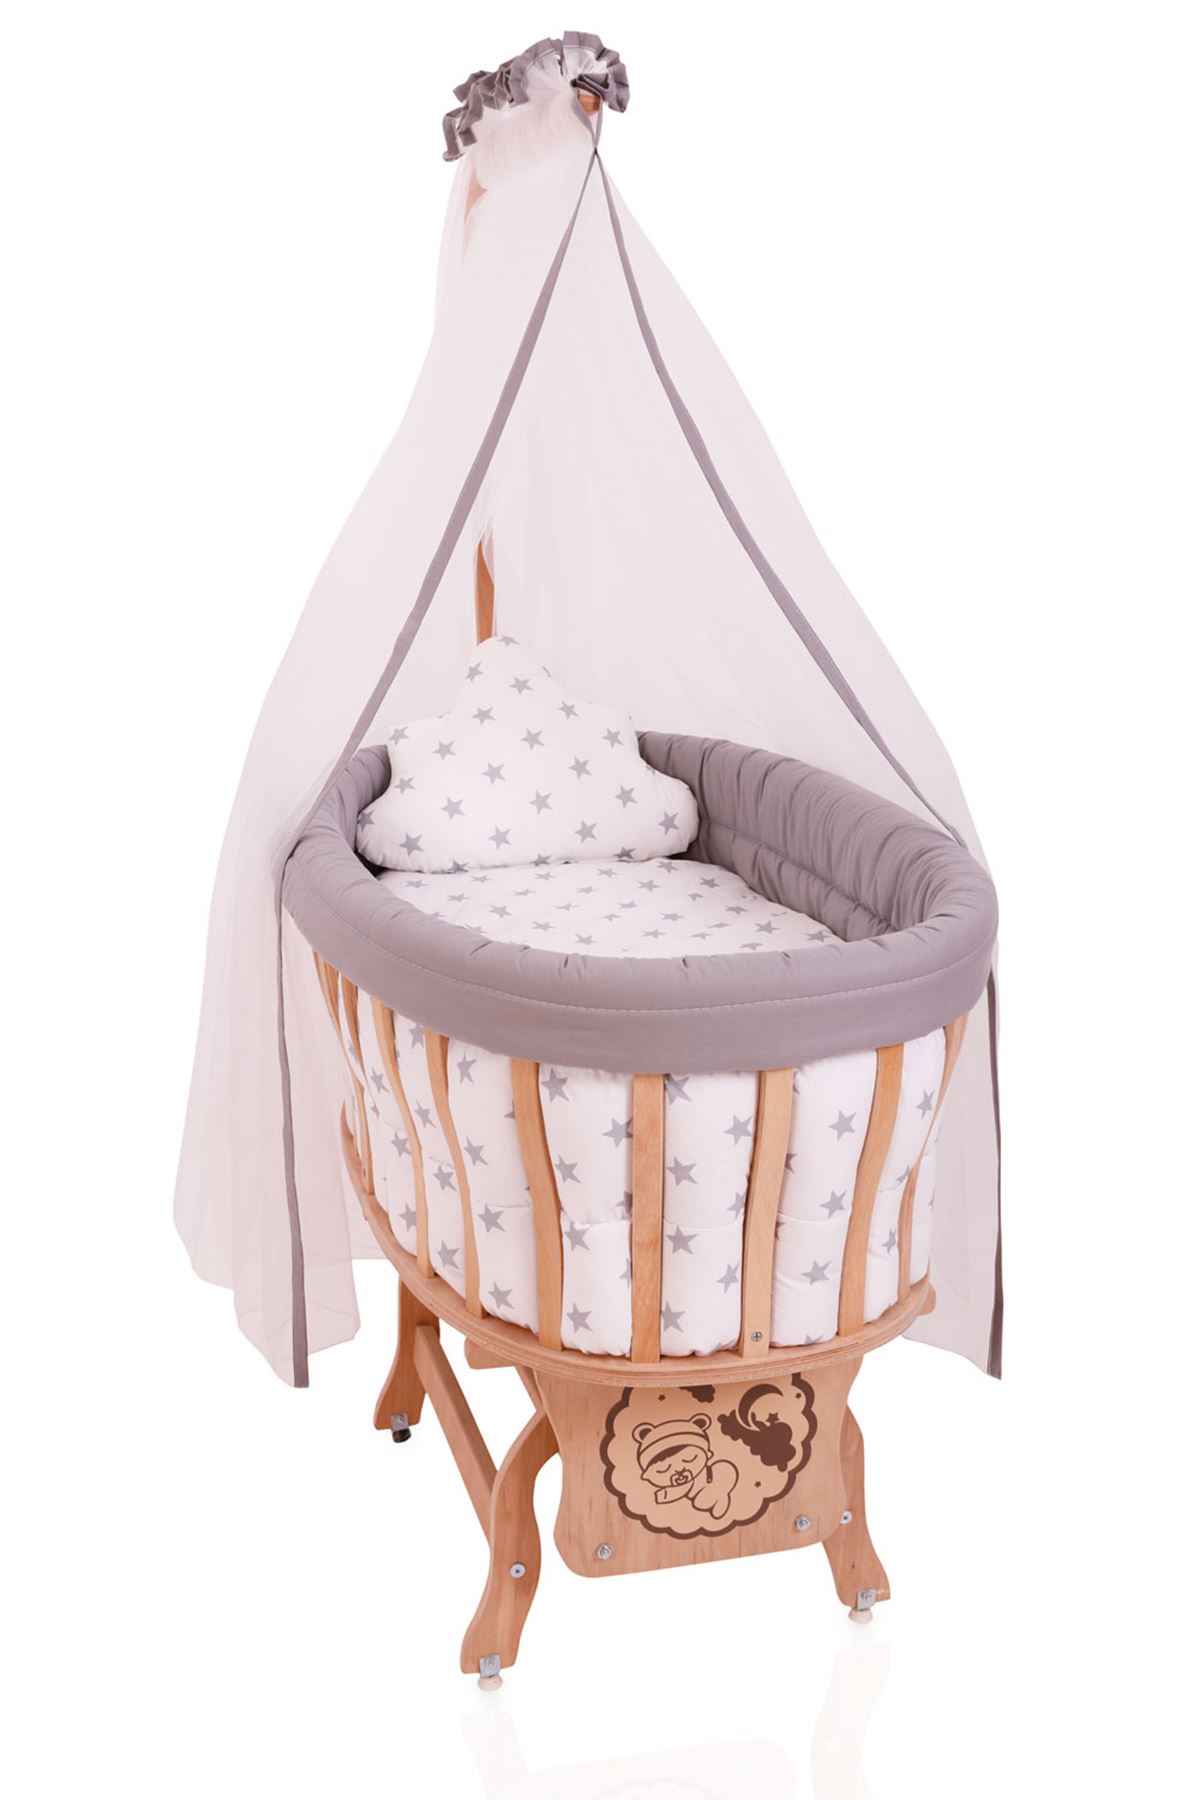 Wooden Baby Crib- Yellow Star Sleeping Set